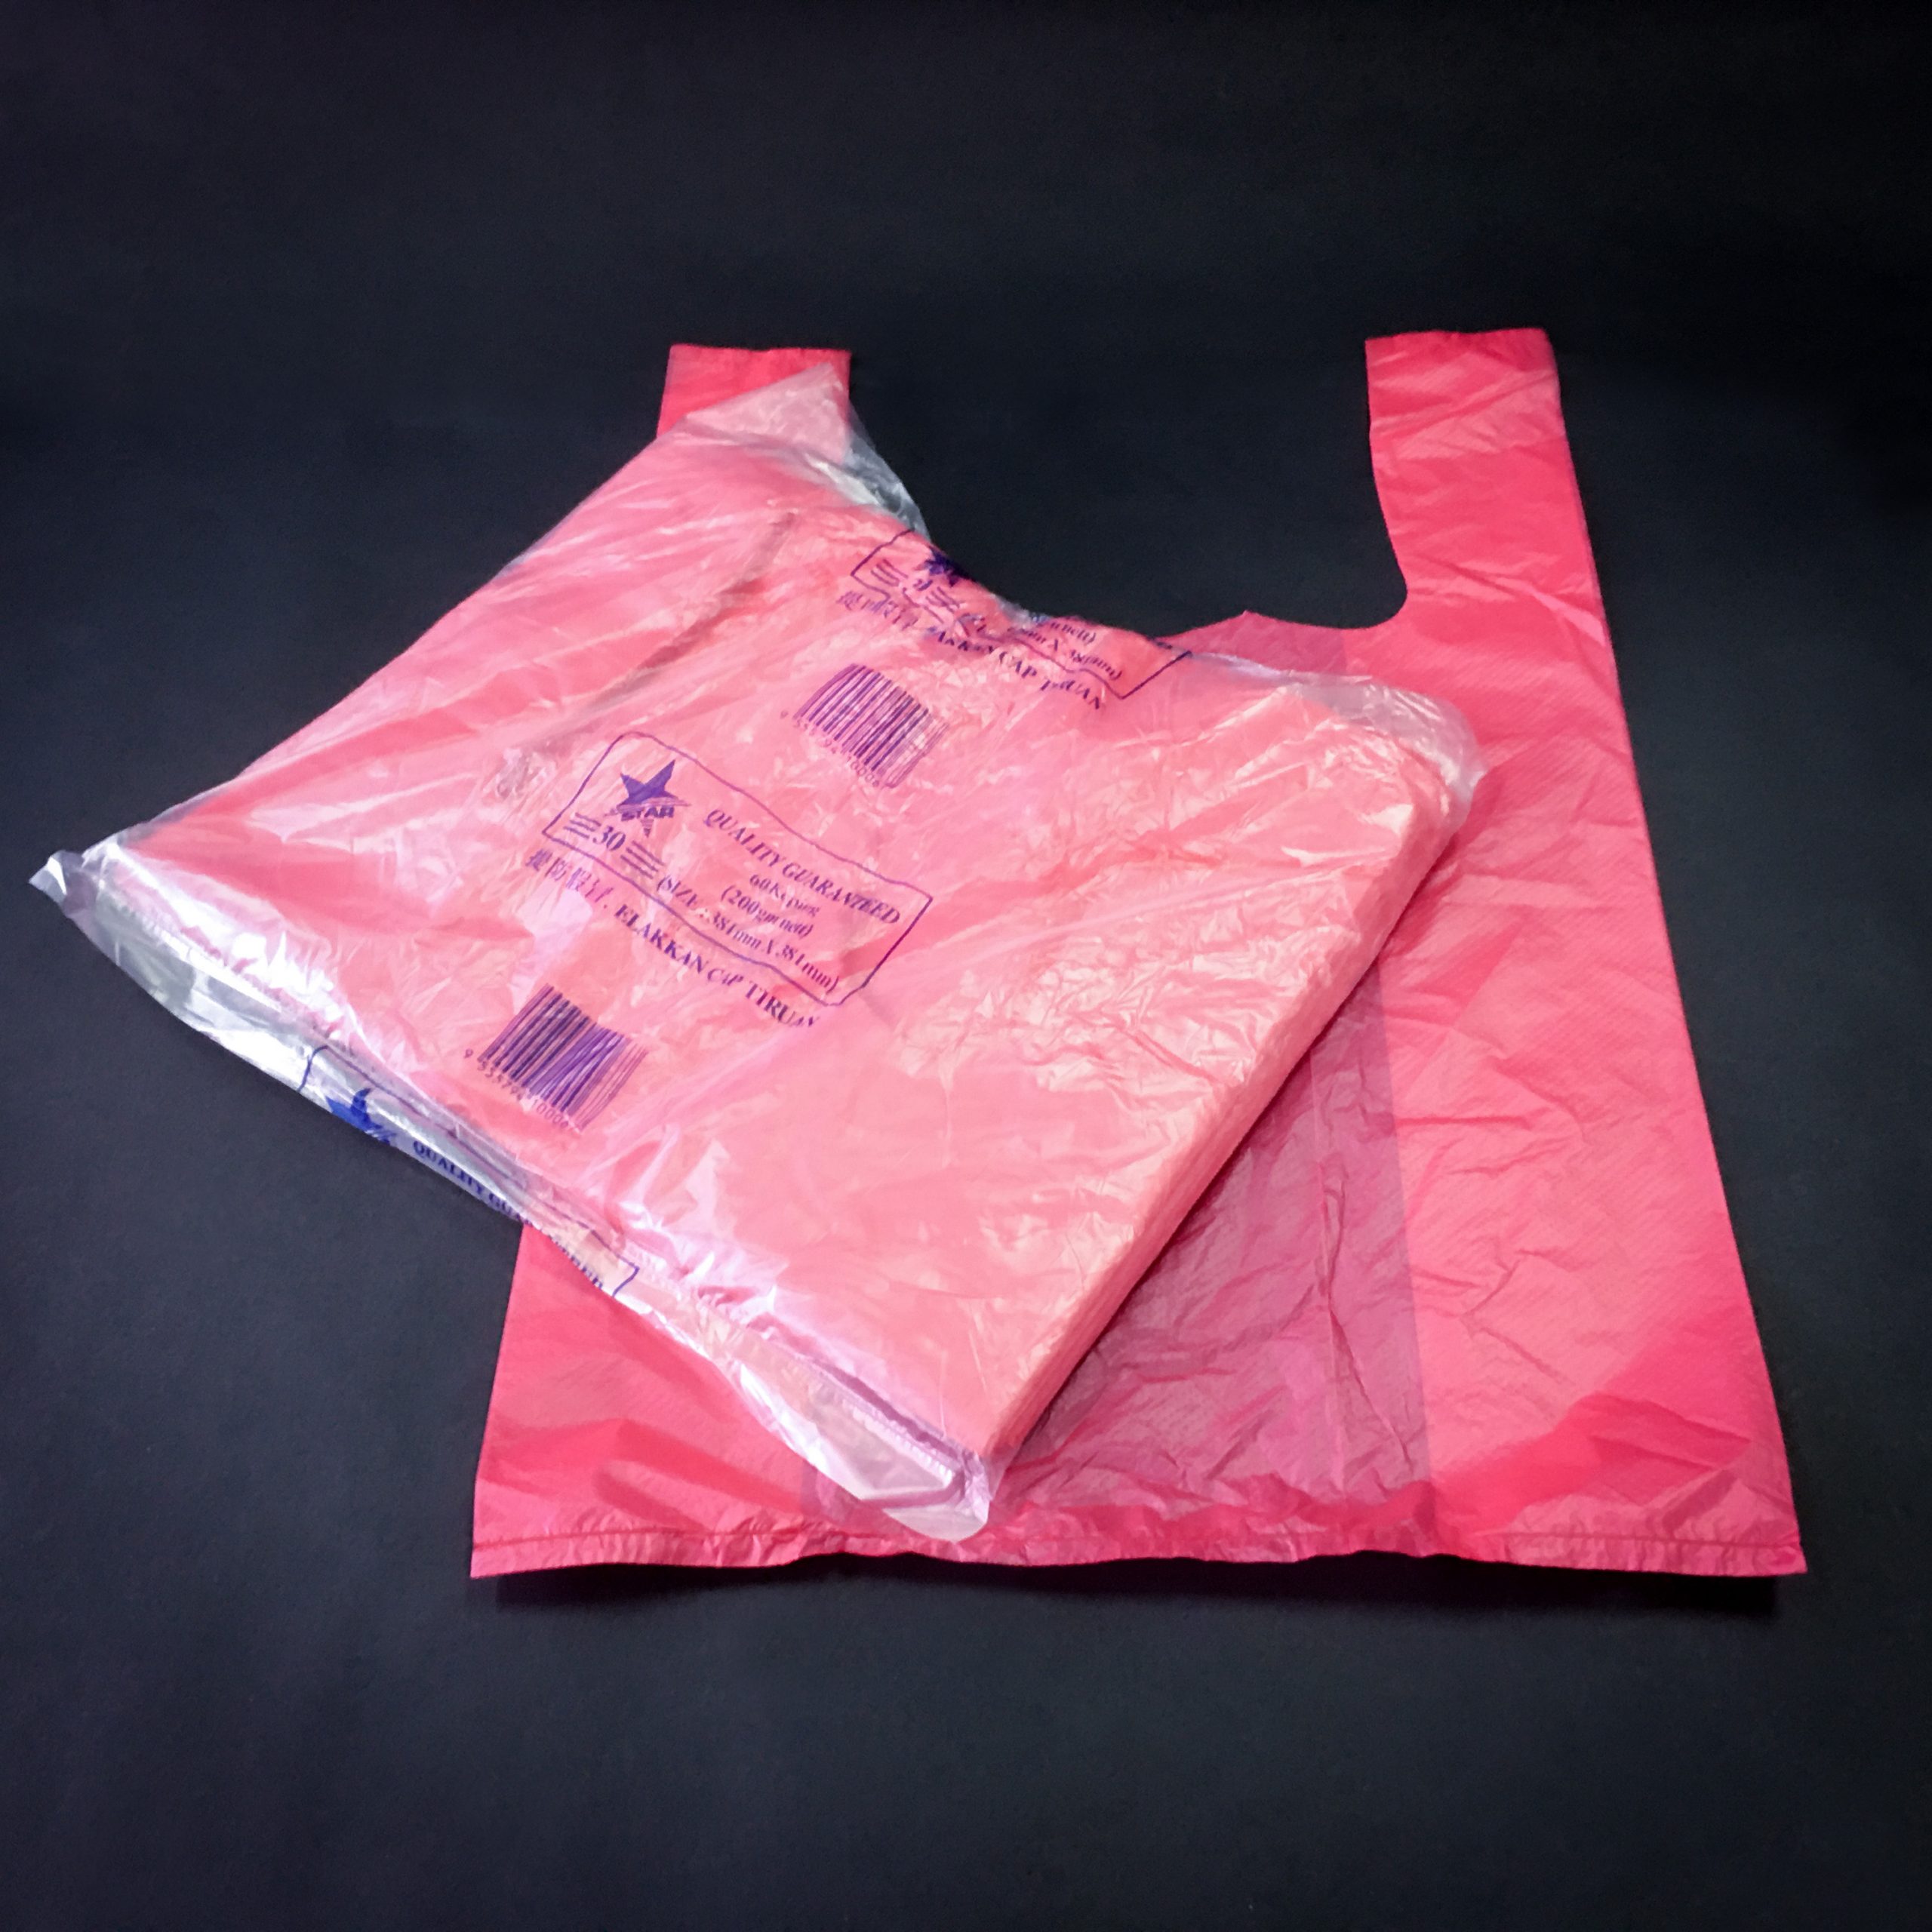 New 2-color silkscreen tote bag. Size 15x16